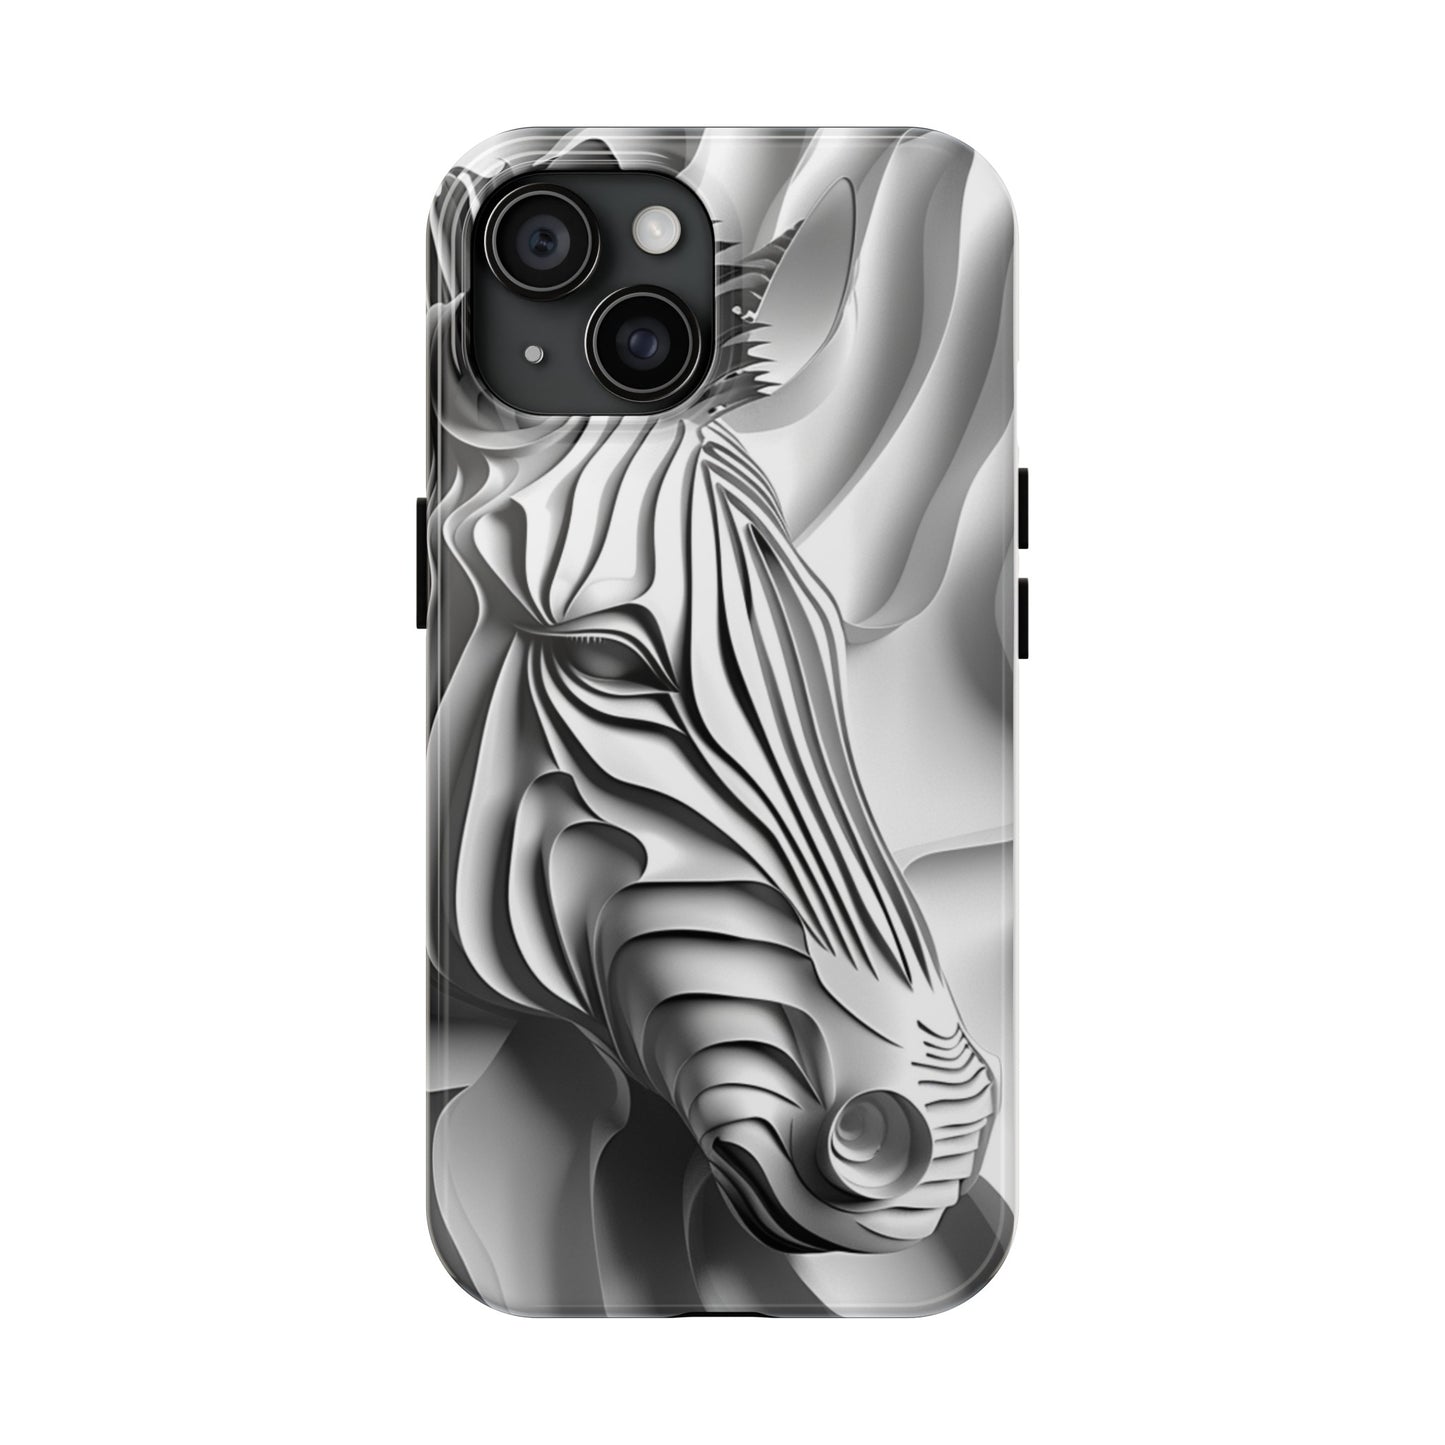 3D Sophisticated Featuring an Elegant Zebra Pattern in Monochrome